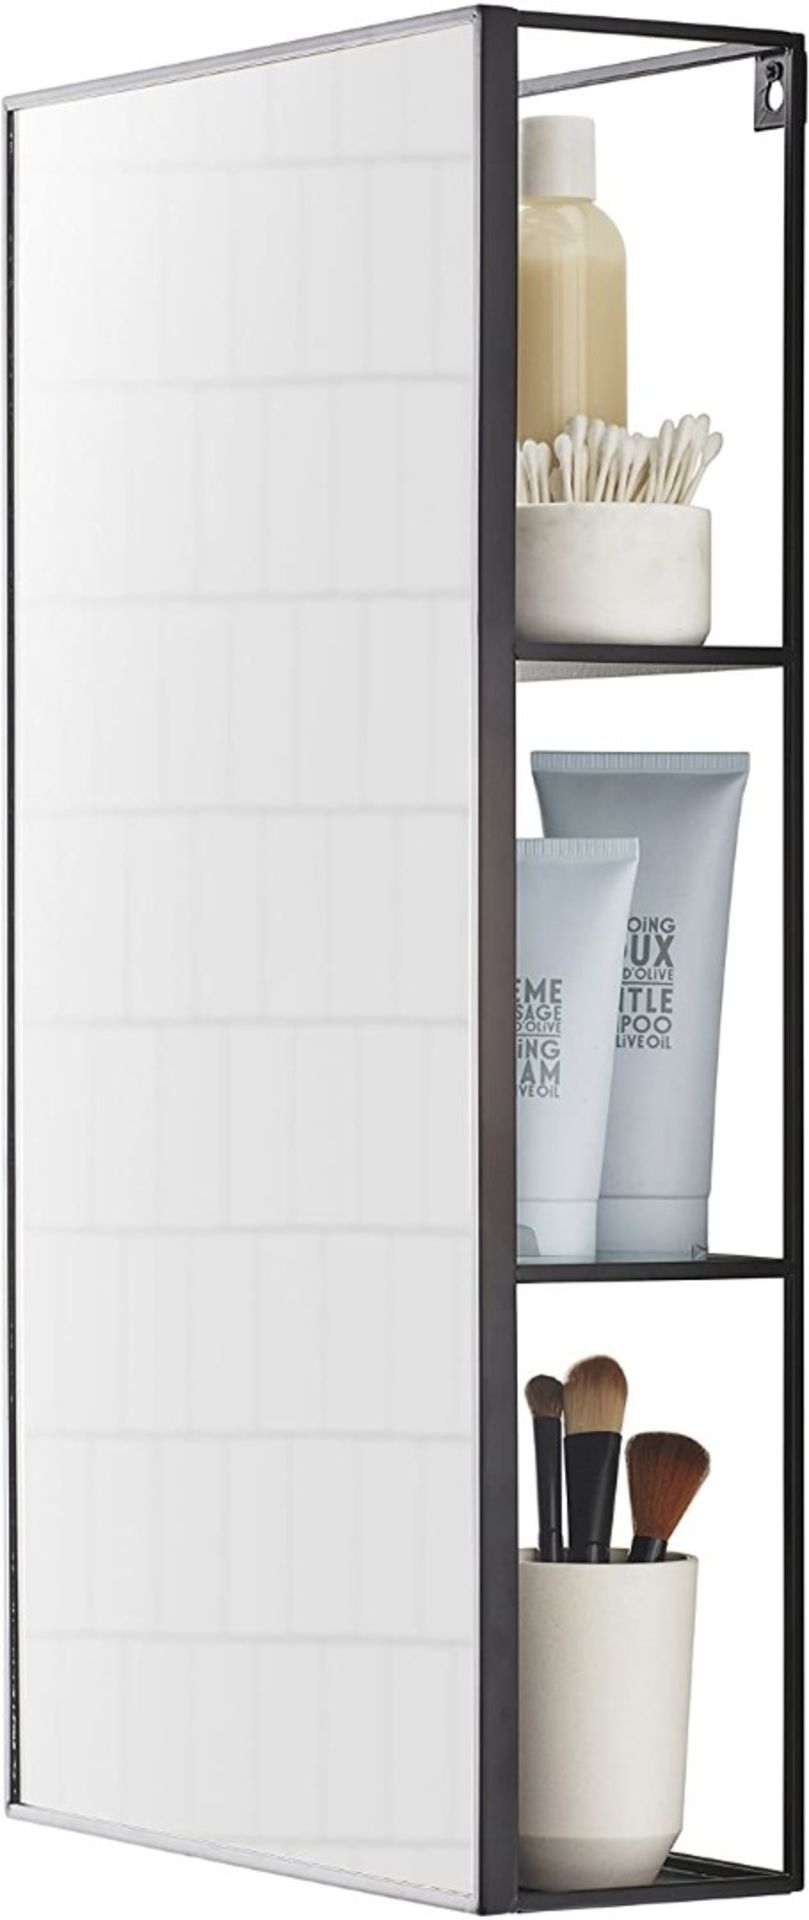 1 x Umbra 'CUBIKO' Sleek Modern Mirrored Medicine Cabinet With A Black Metal Frame - Dimensions: - Image 7 of 8